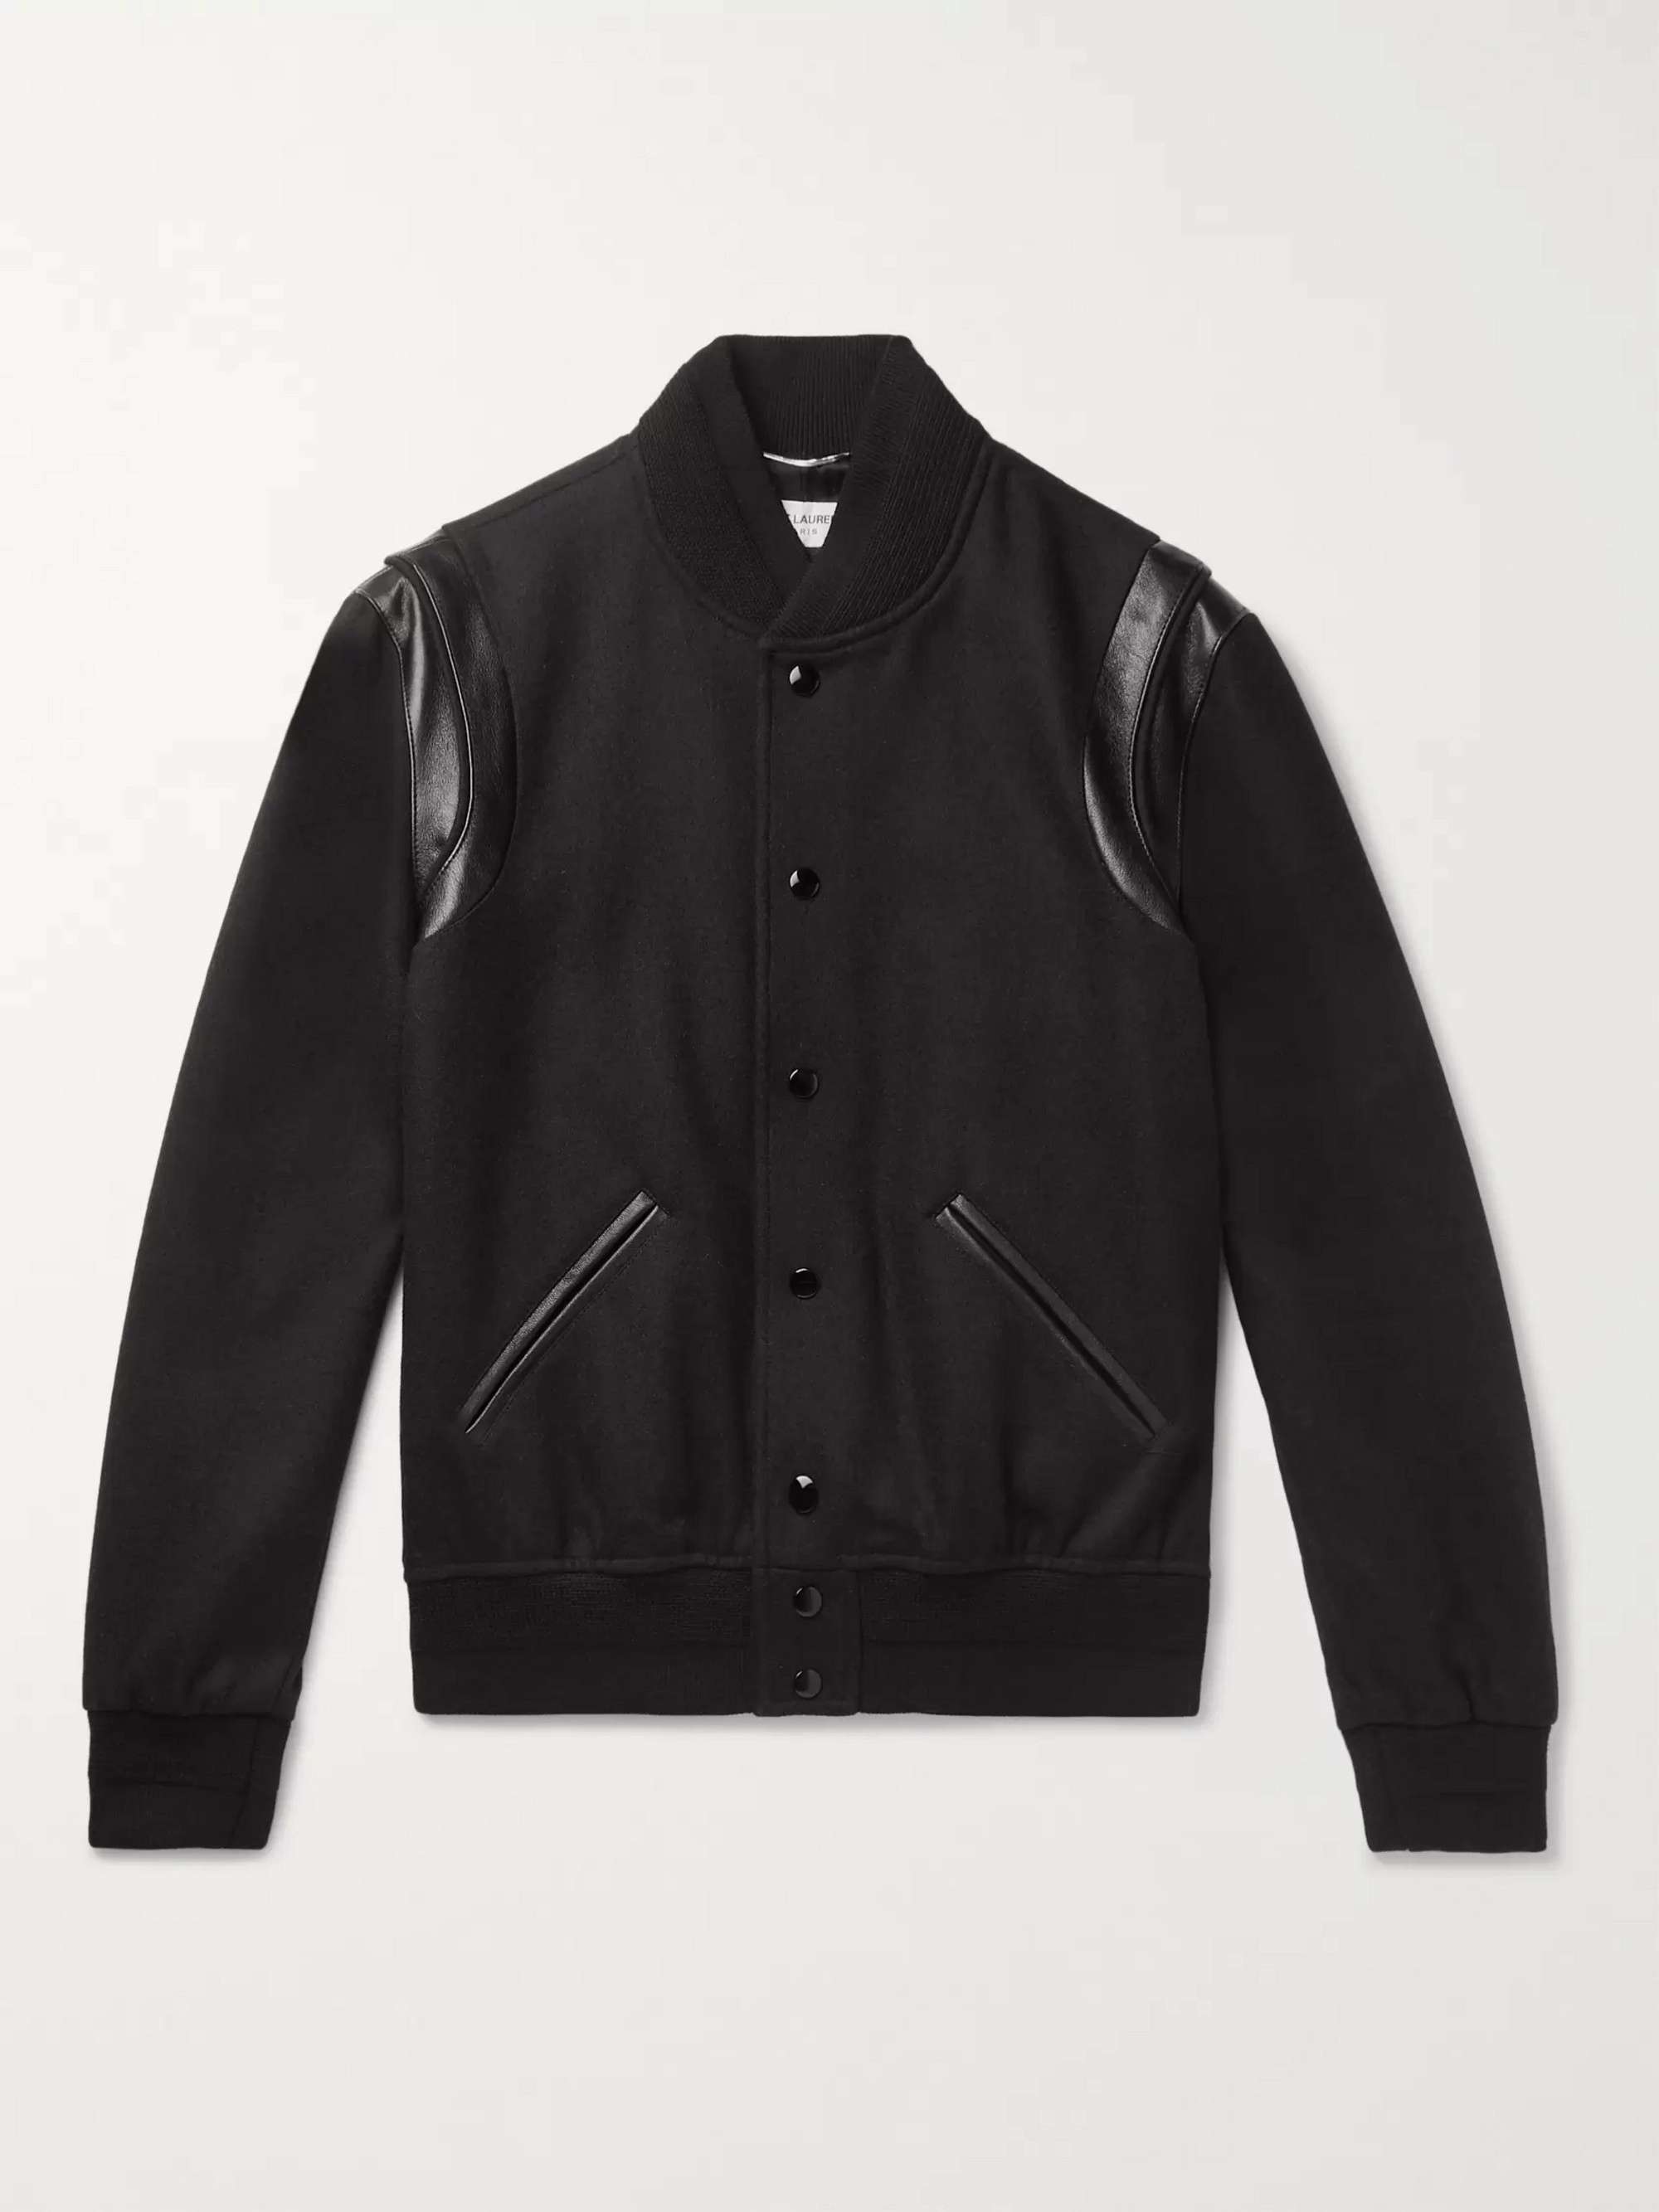 SAINT LAURENT Teddy Leather-Trimmed Wool Bomber Jacket for Men | MR PORTER